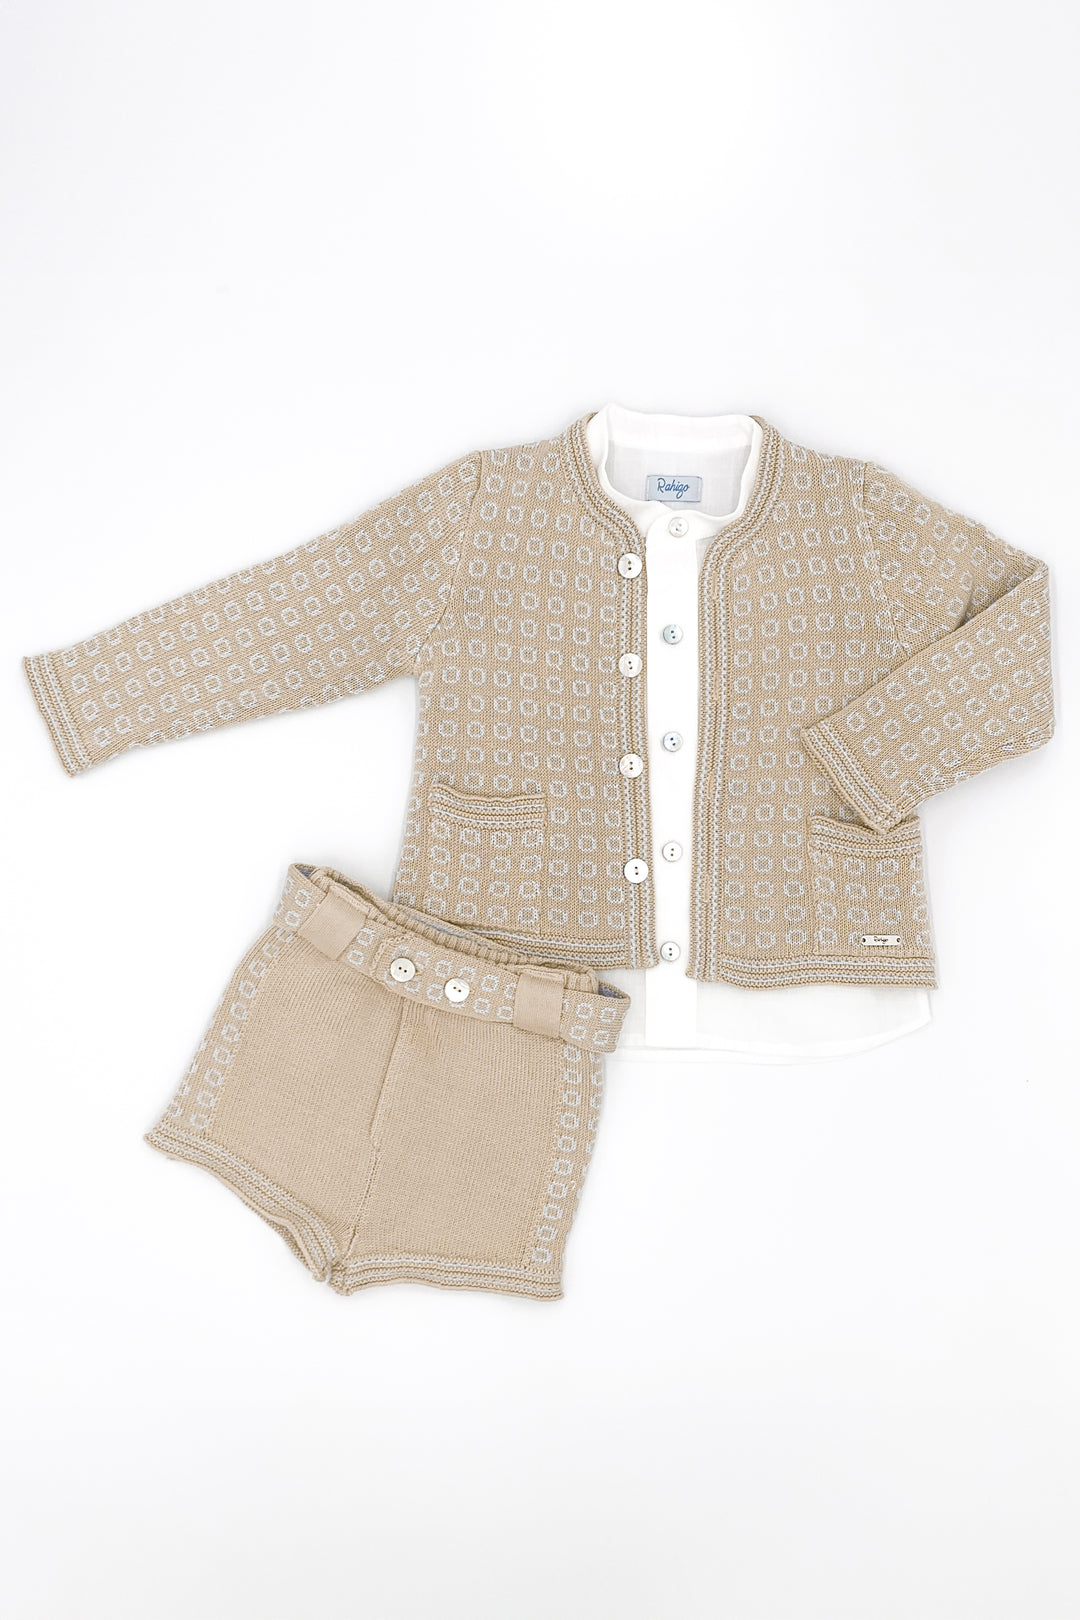 Rahigo PREORDER "Albie" Camel & Baby Blue Knit Cardigan, Shirt & Shorts | Millie and John